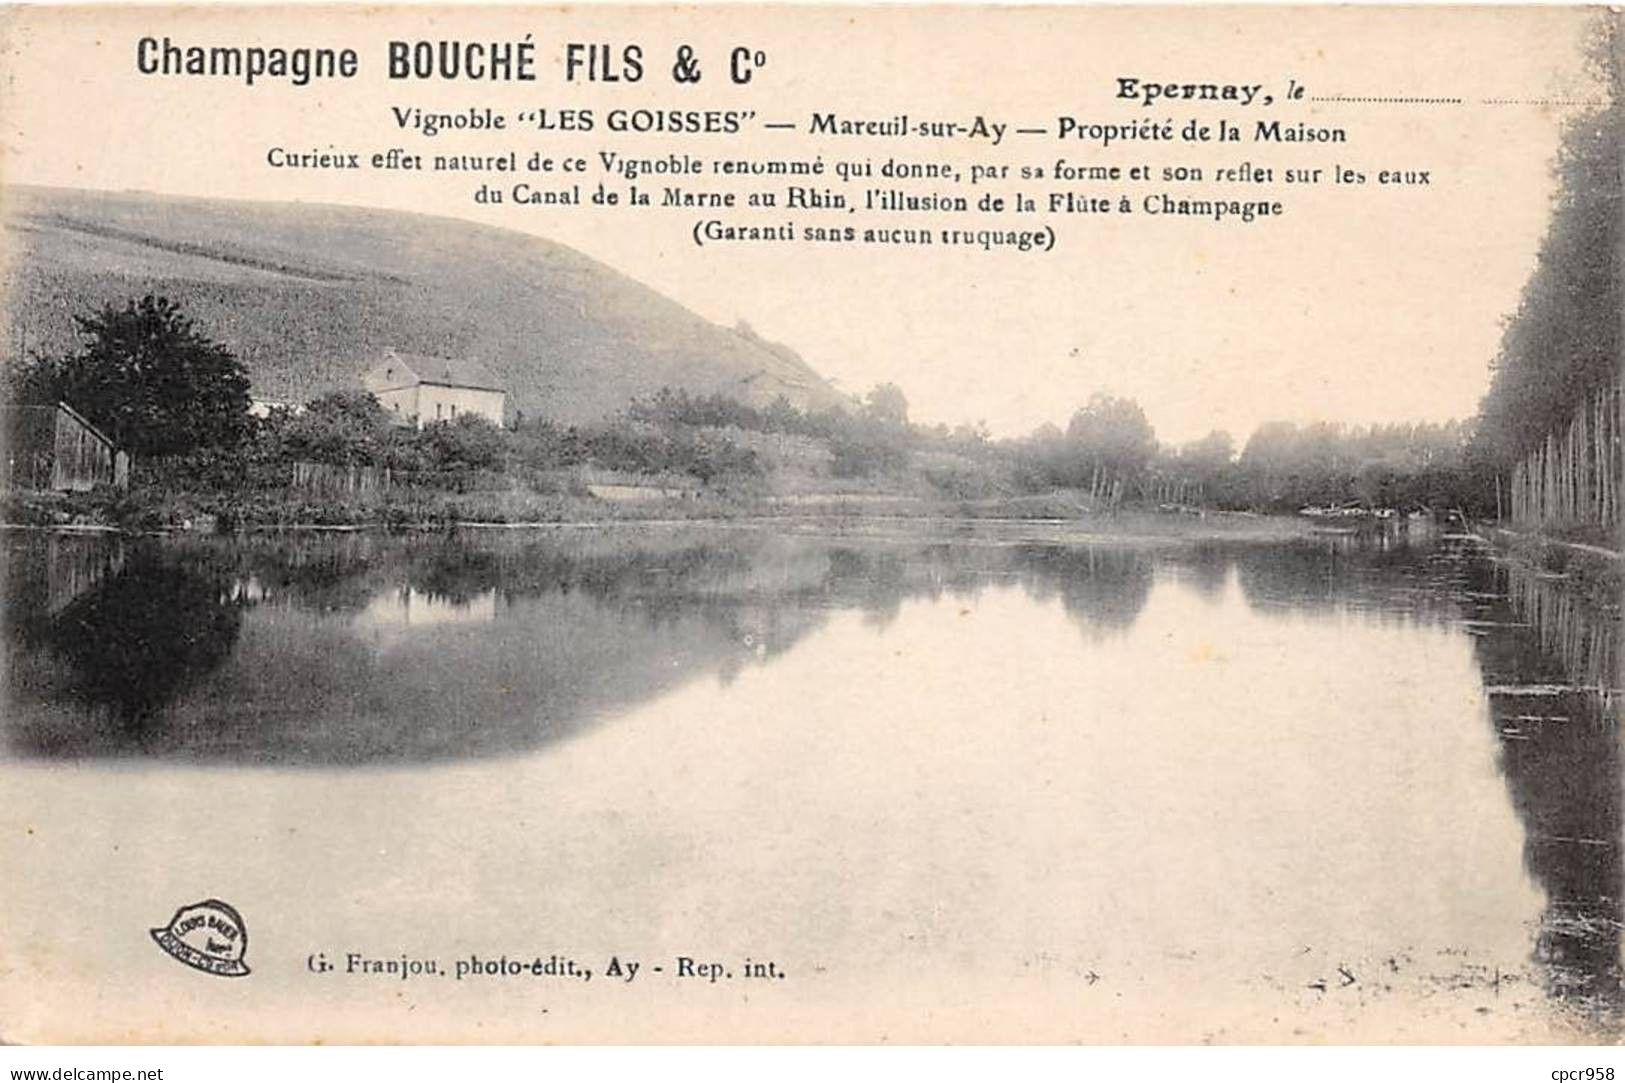 51 - EPERNAY - SAN30656 - Champagne Bouché Fils & Cie - Vignoble "Les Goisses" - Agriculture - Vigne - Epernay